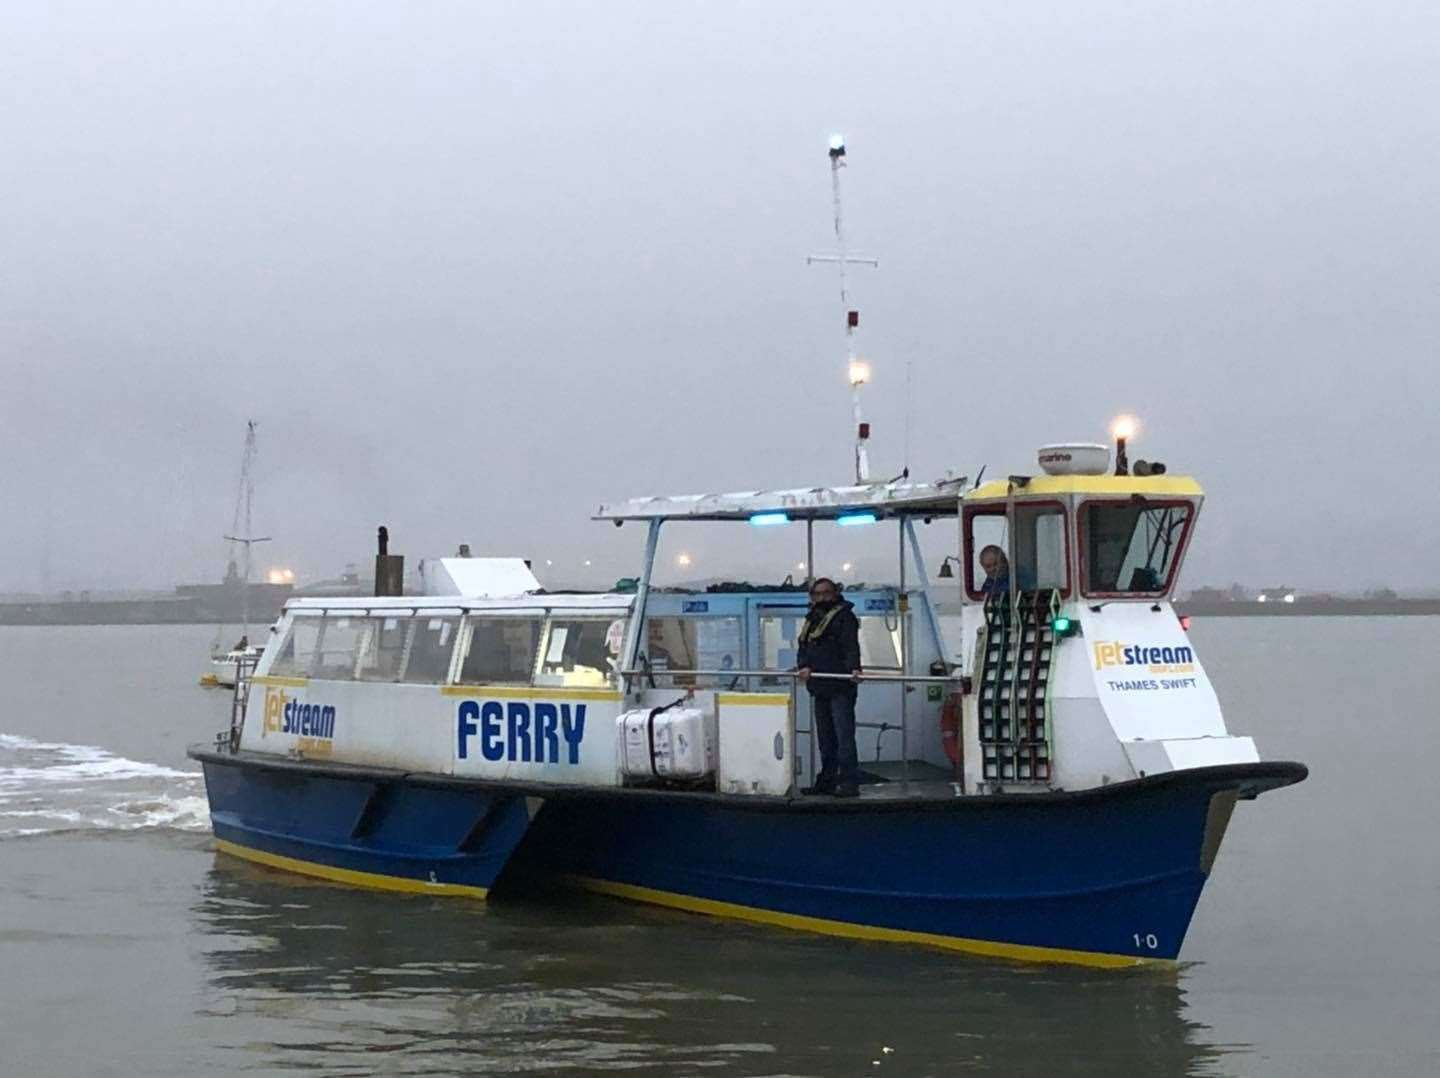 The Thames Swift Tilbury ferry